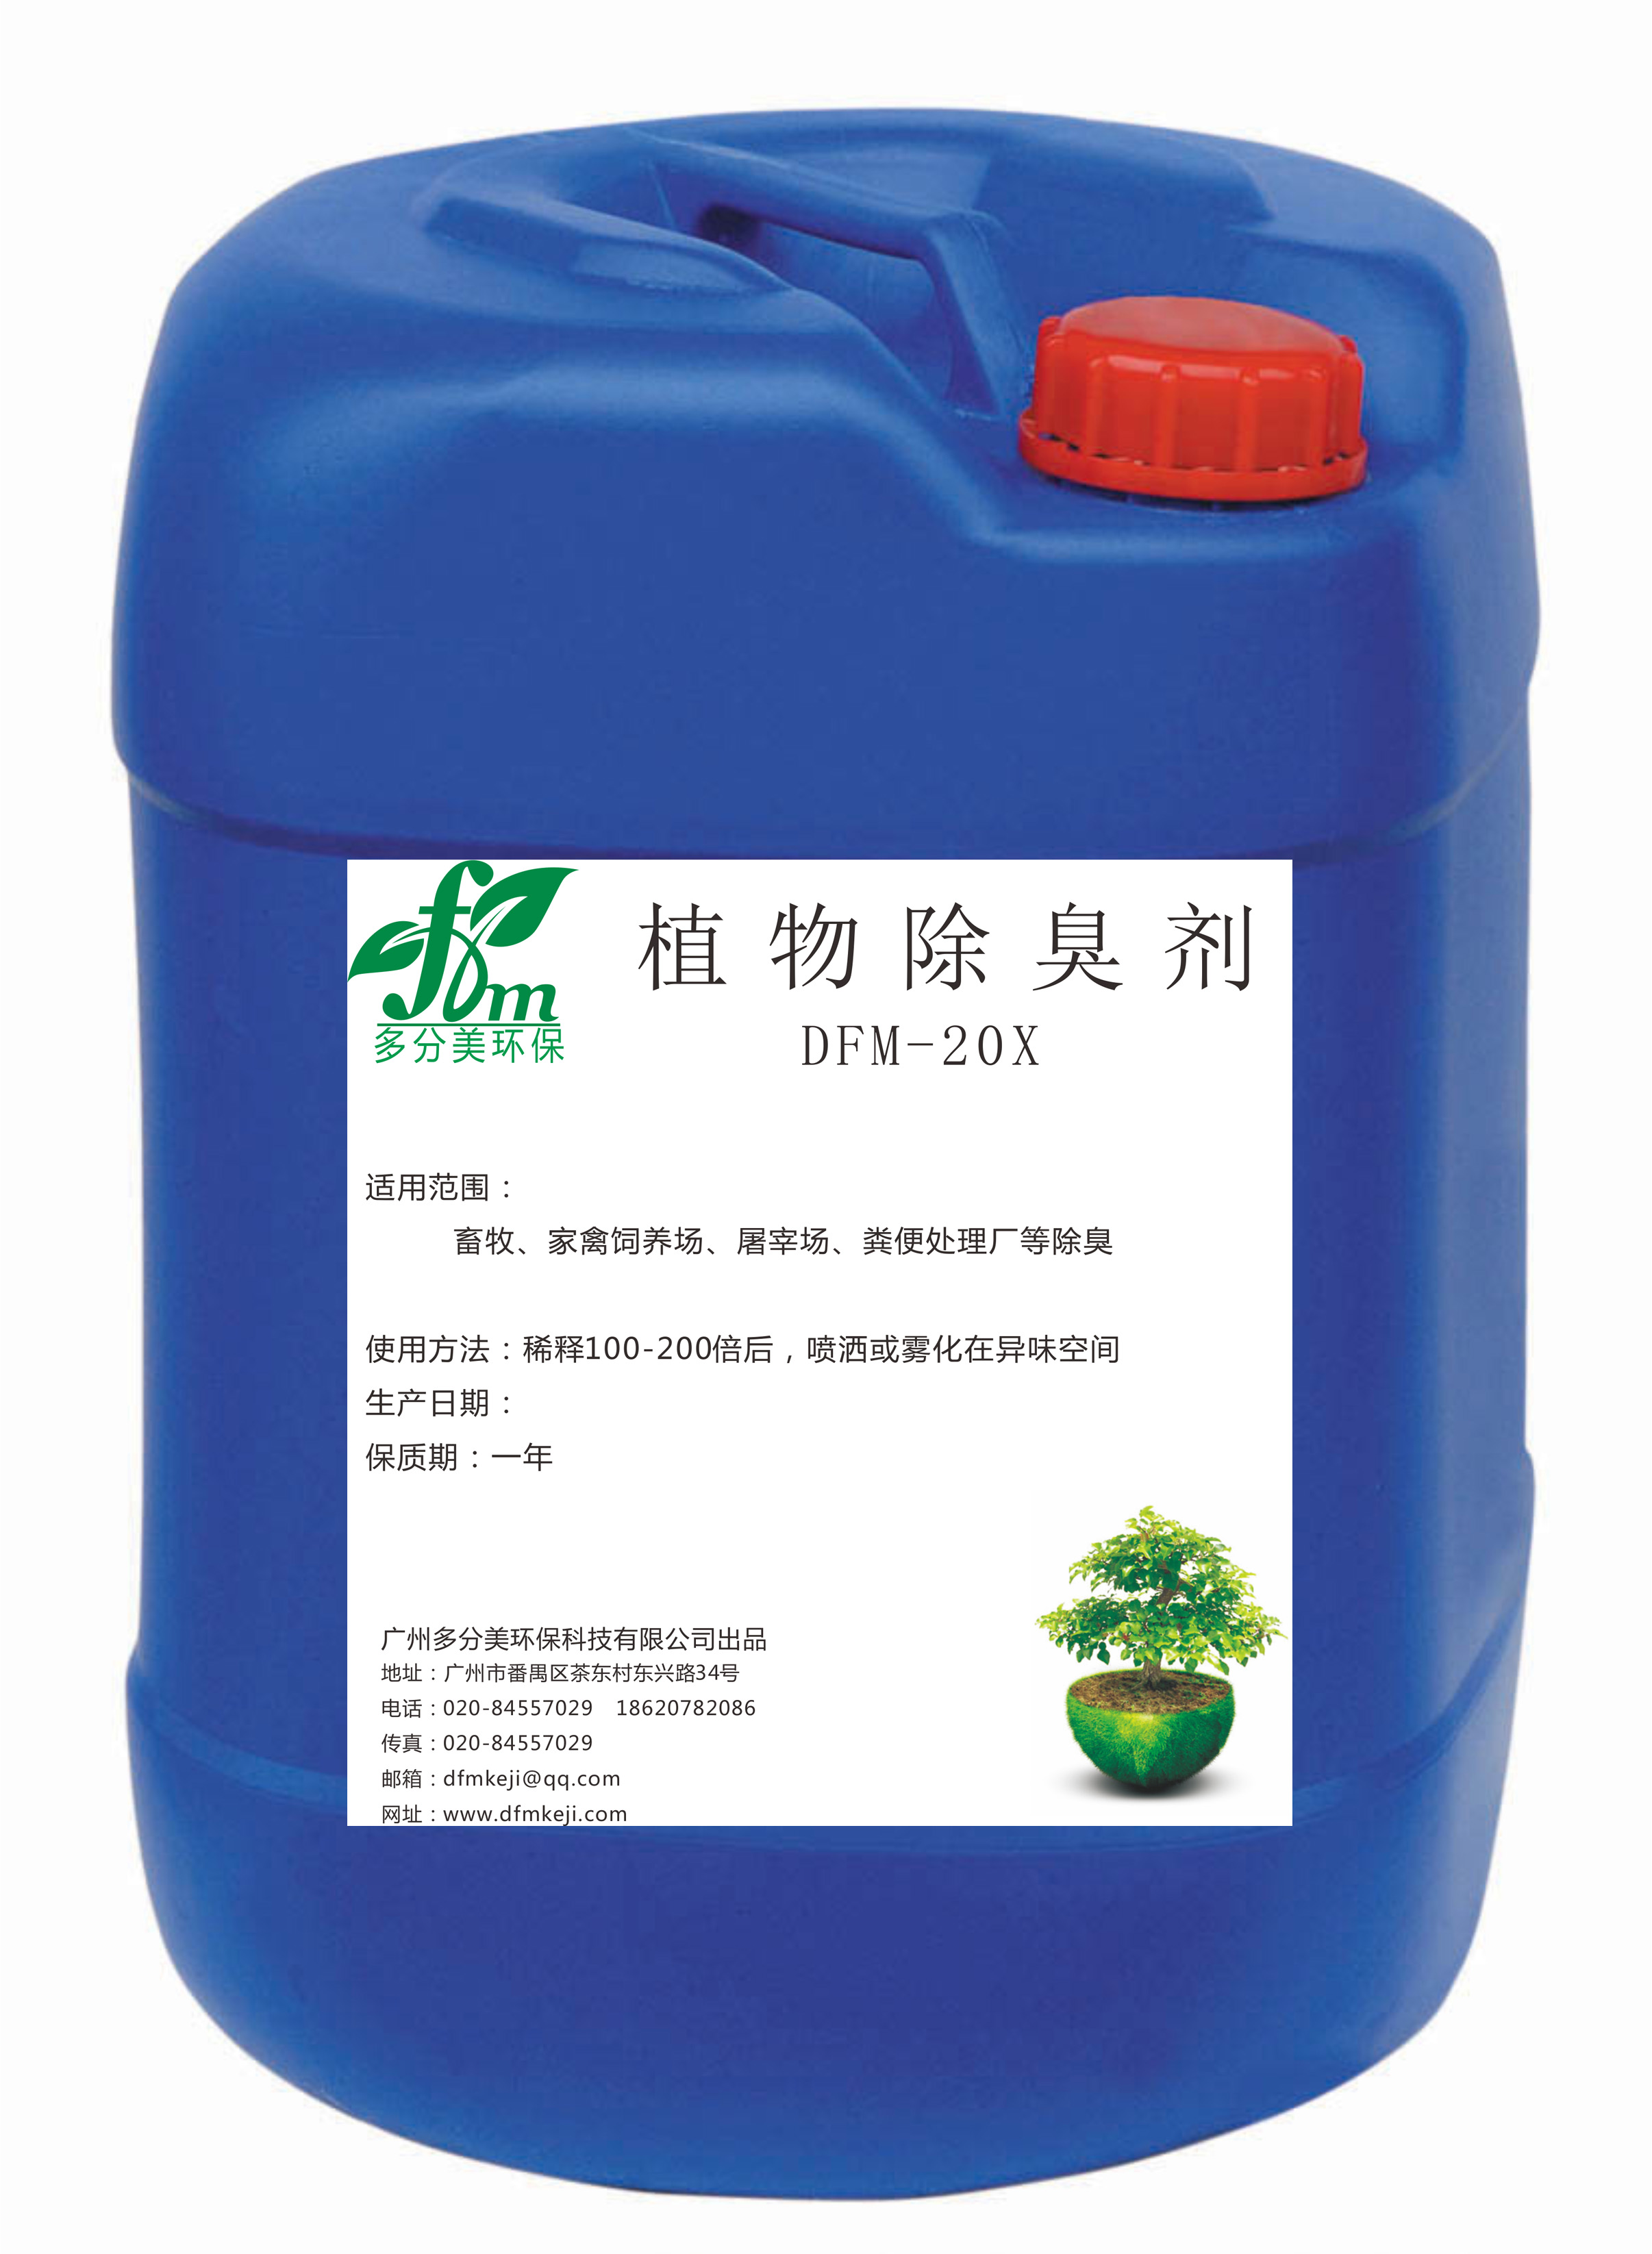 dfm-20x型供应多分美植物除臭剂